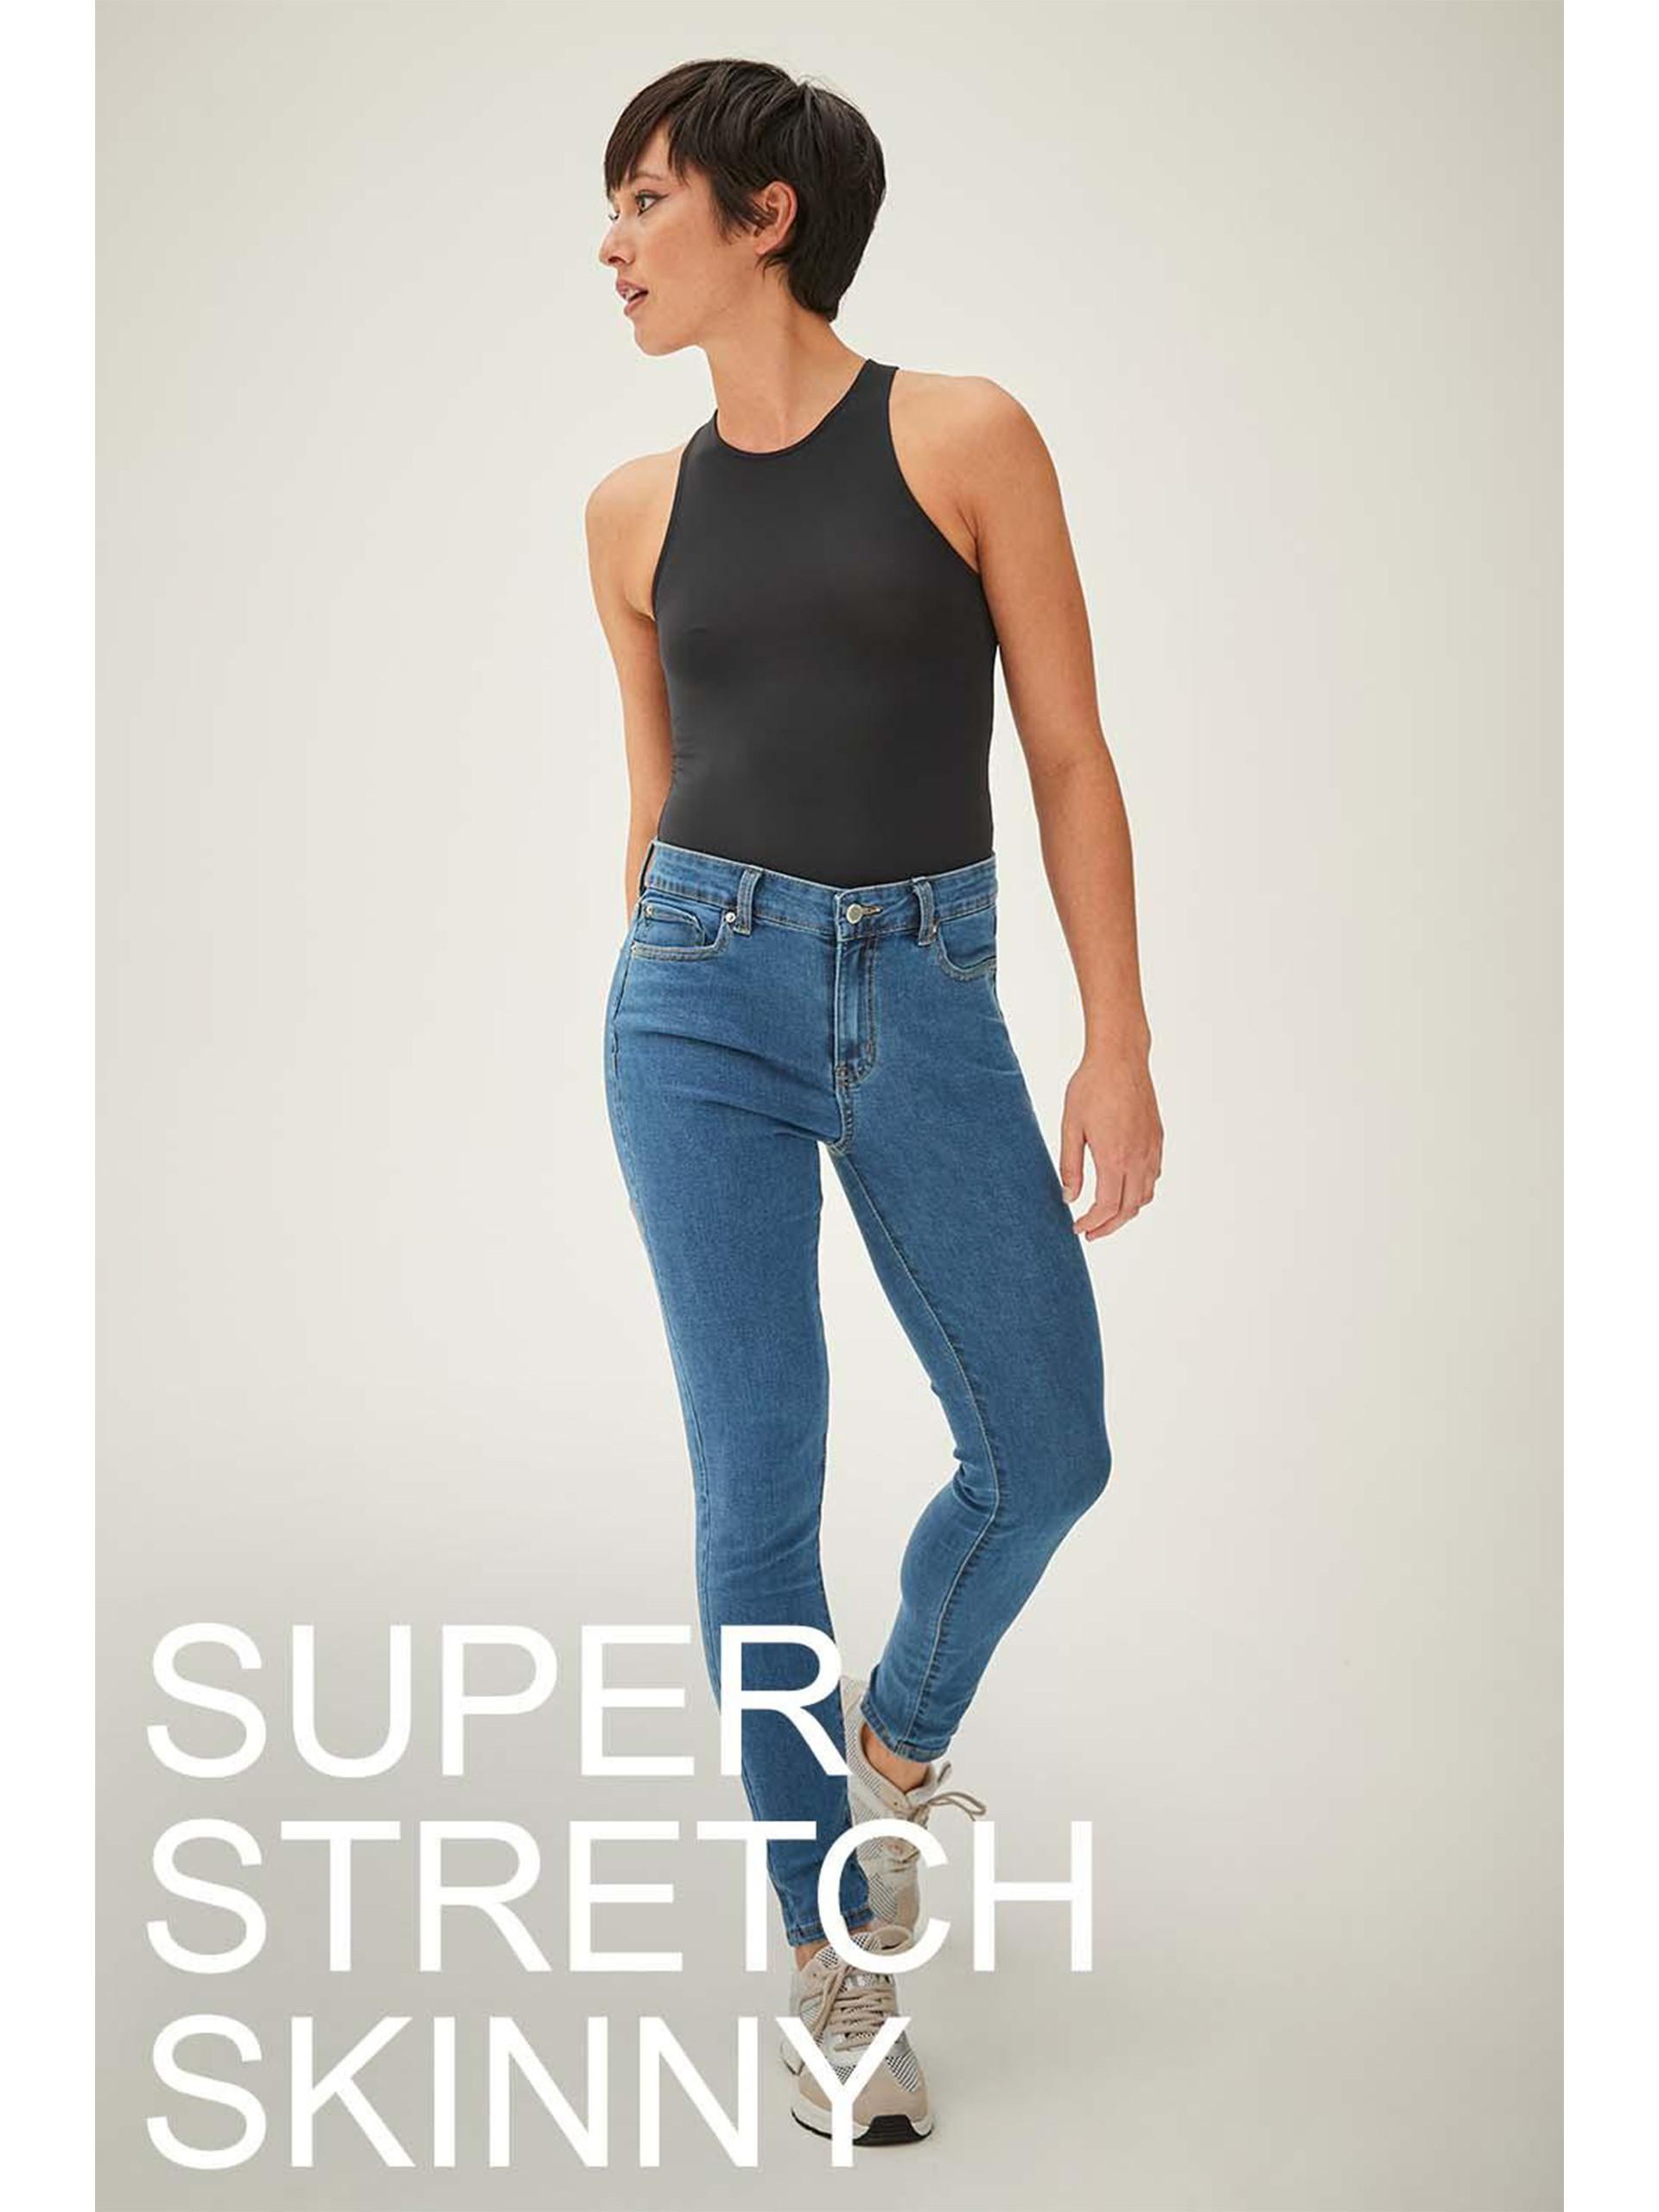 Model wears blue super stretch skinny jeans